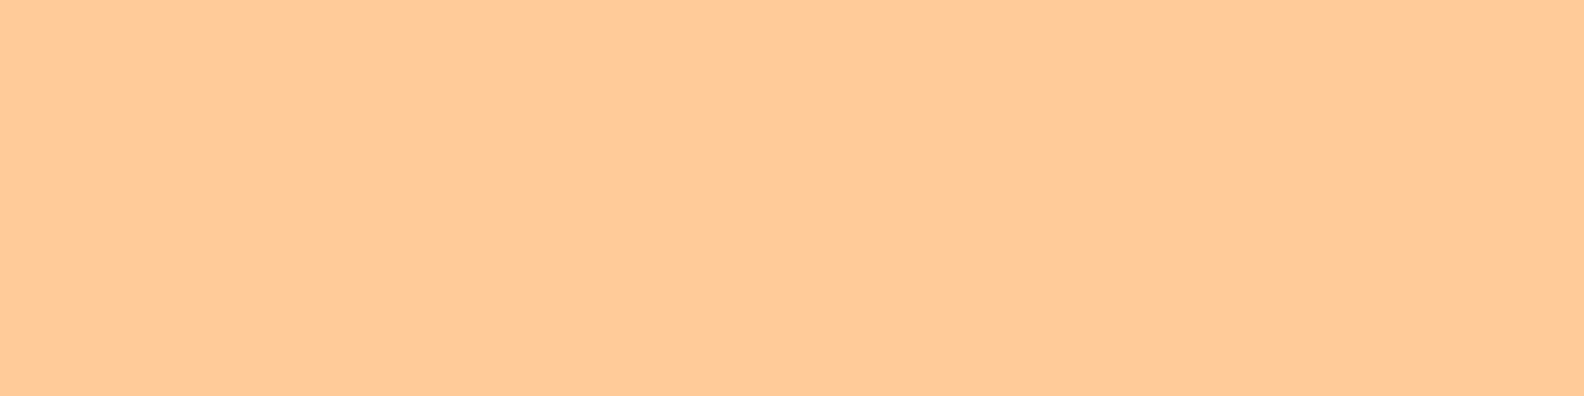 1584x396 Peach-orange Solid Color Background